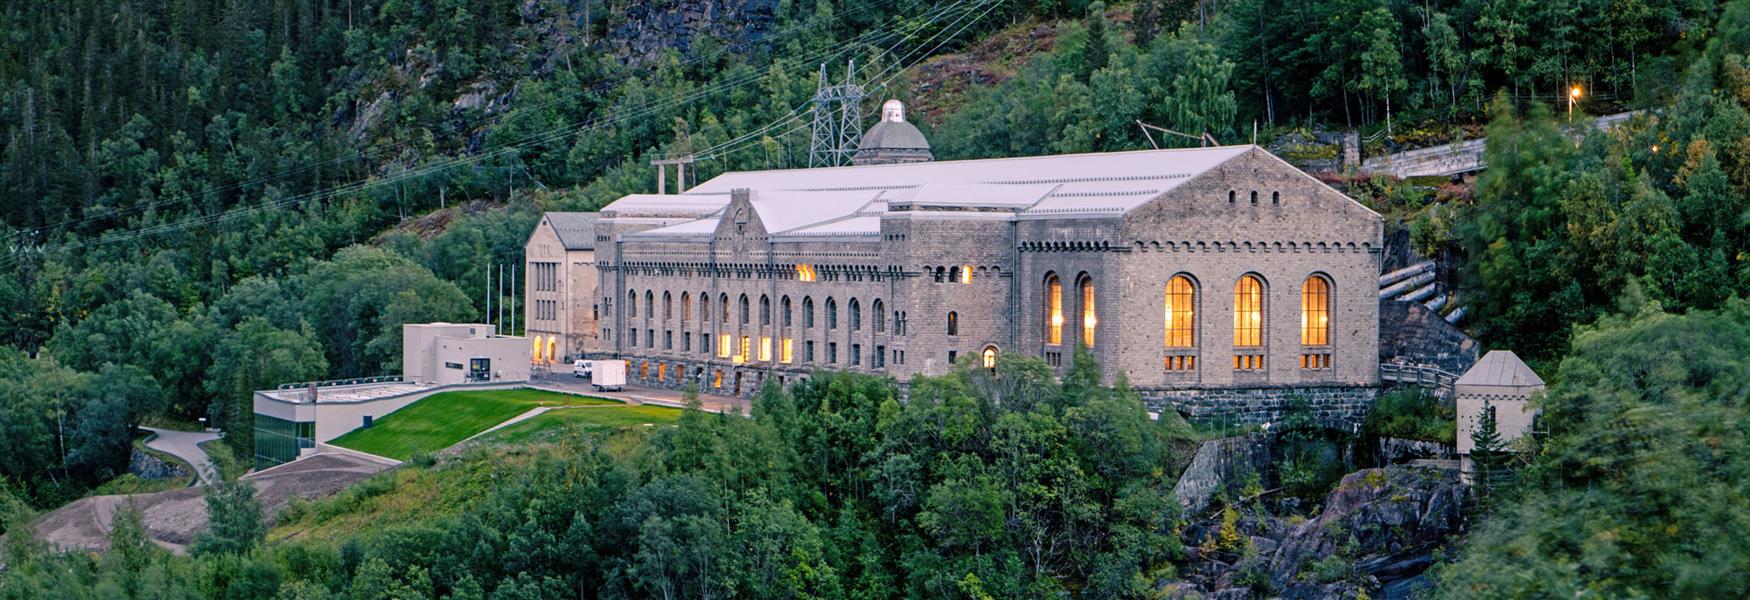 Norsk Industriarbeider Museum Vemork på Rjukan